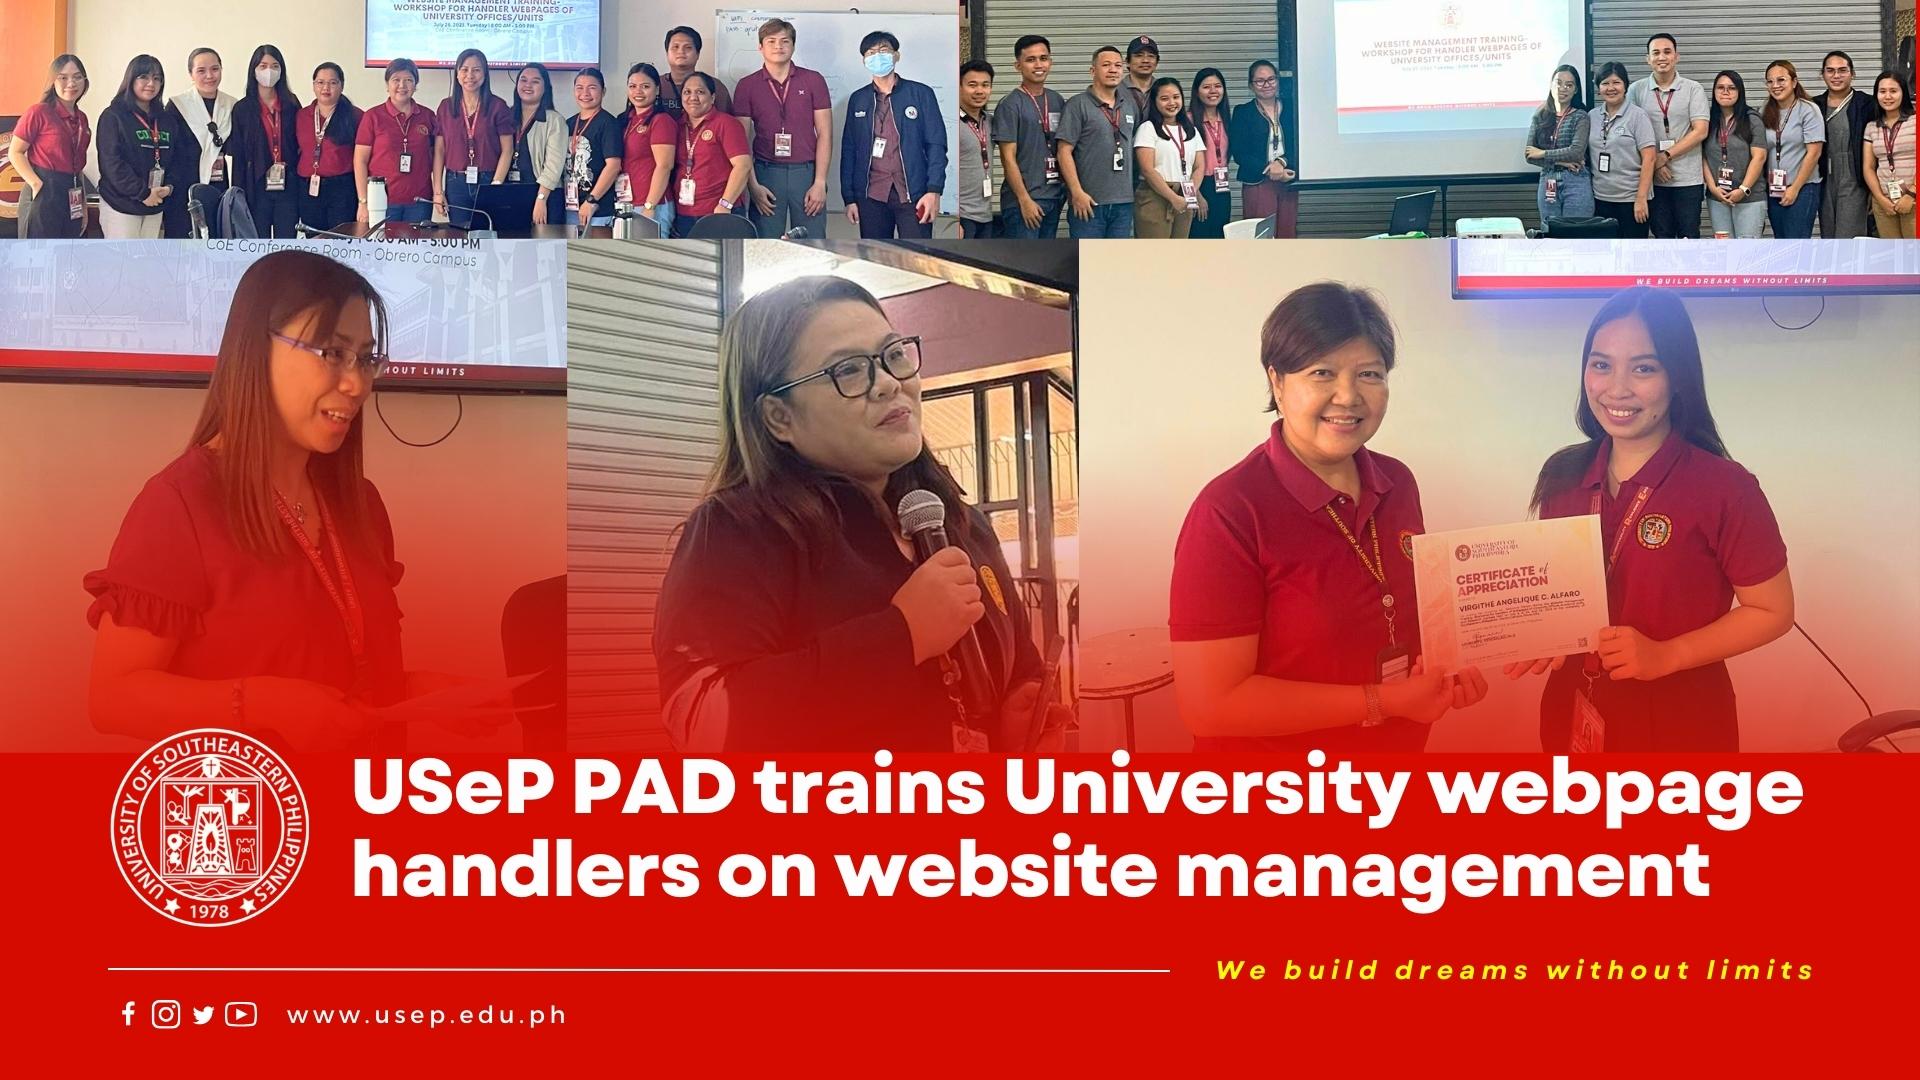 USeP PAD trains University webpage handlers on website management